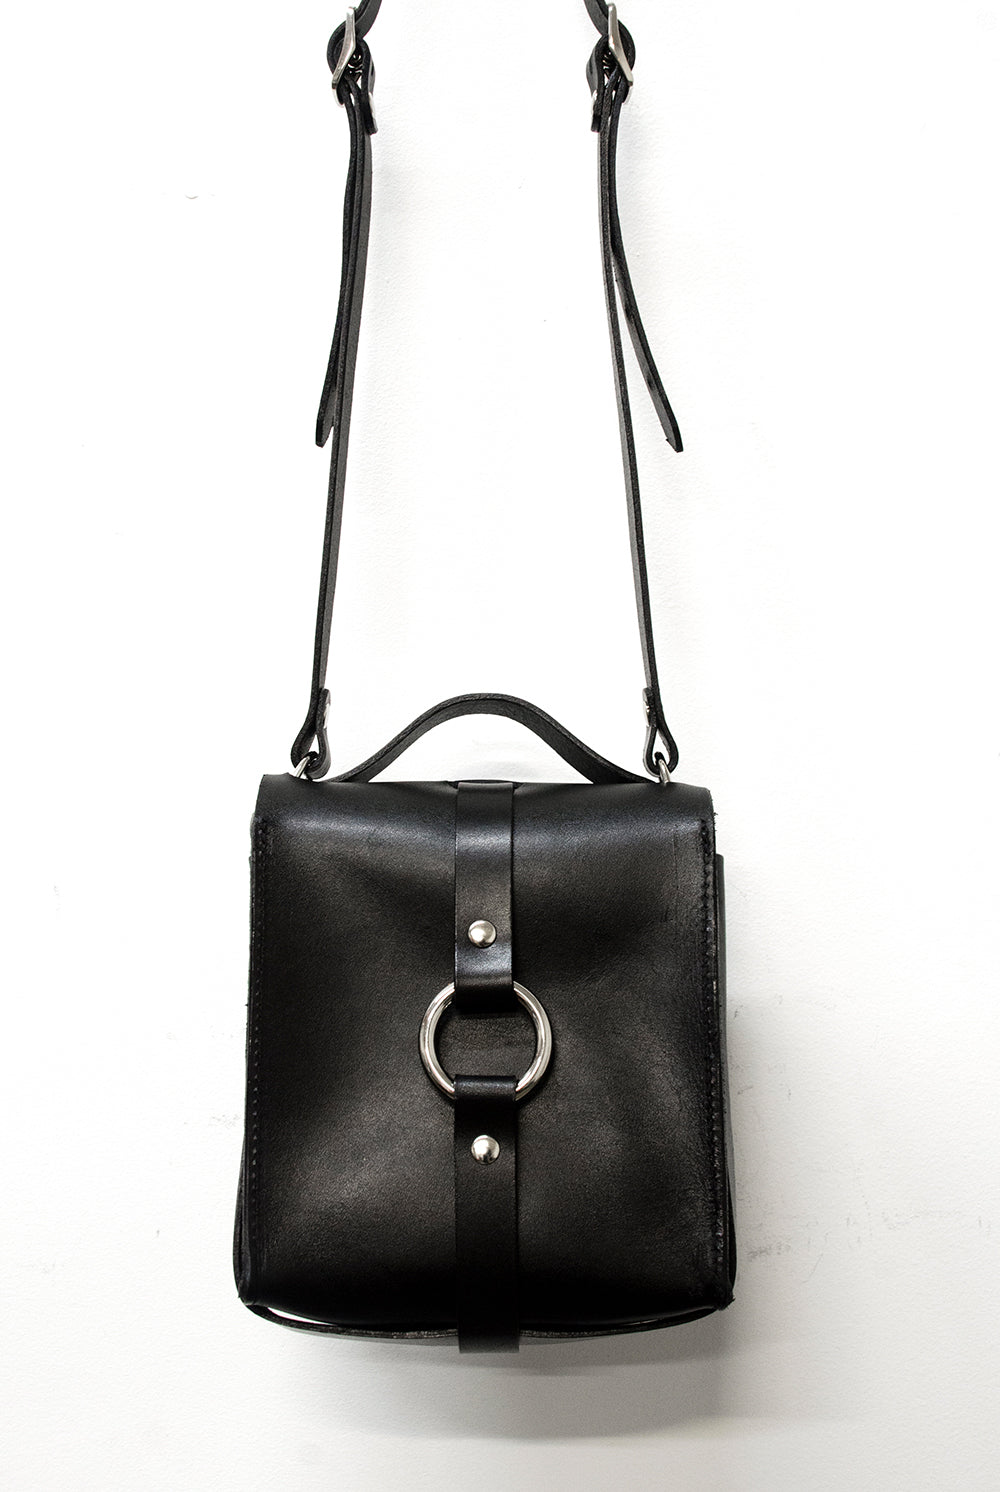 Necano Women Tote Bag Pu leather Tassels Shoulder Handbags Purses Bags with  Love tag- Black